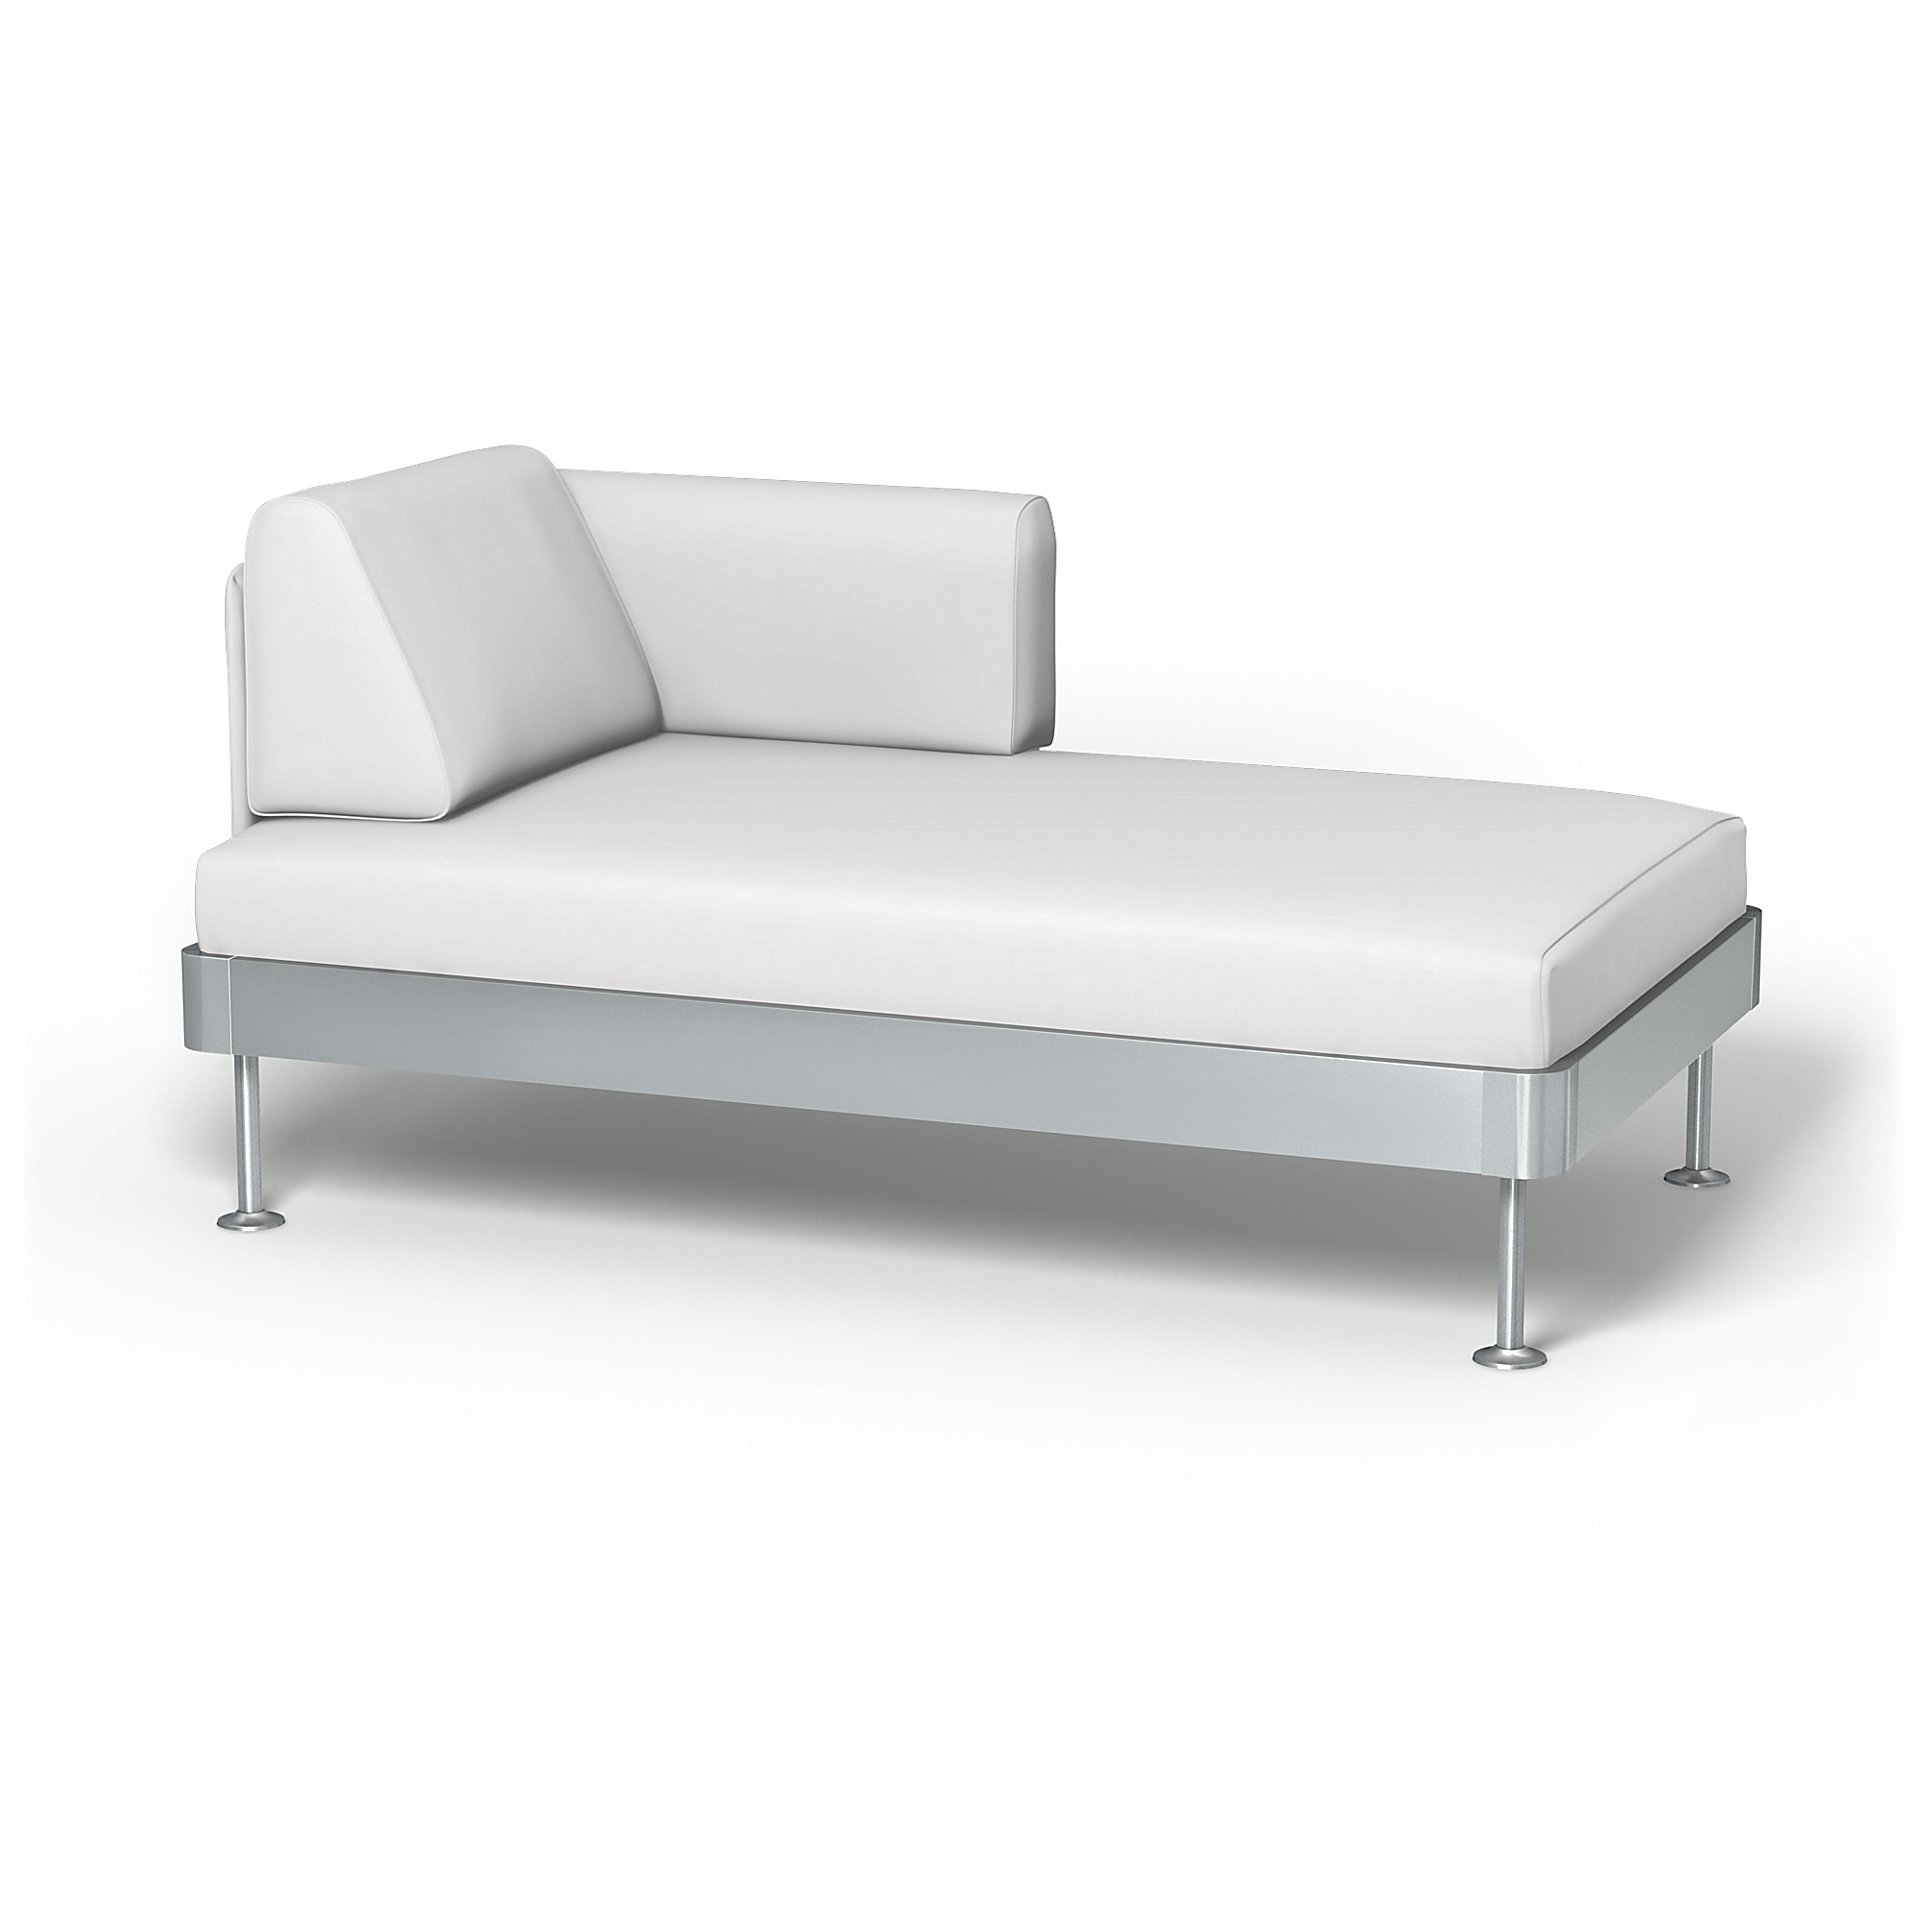 IKEA - Delaktig Chaise Longue Cover, Absolute White, Cotton - Bemz